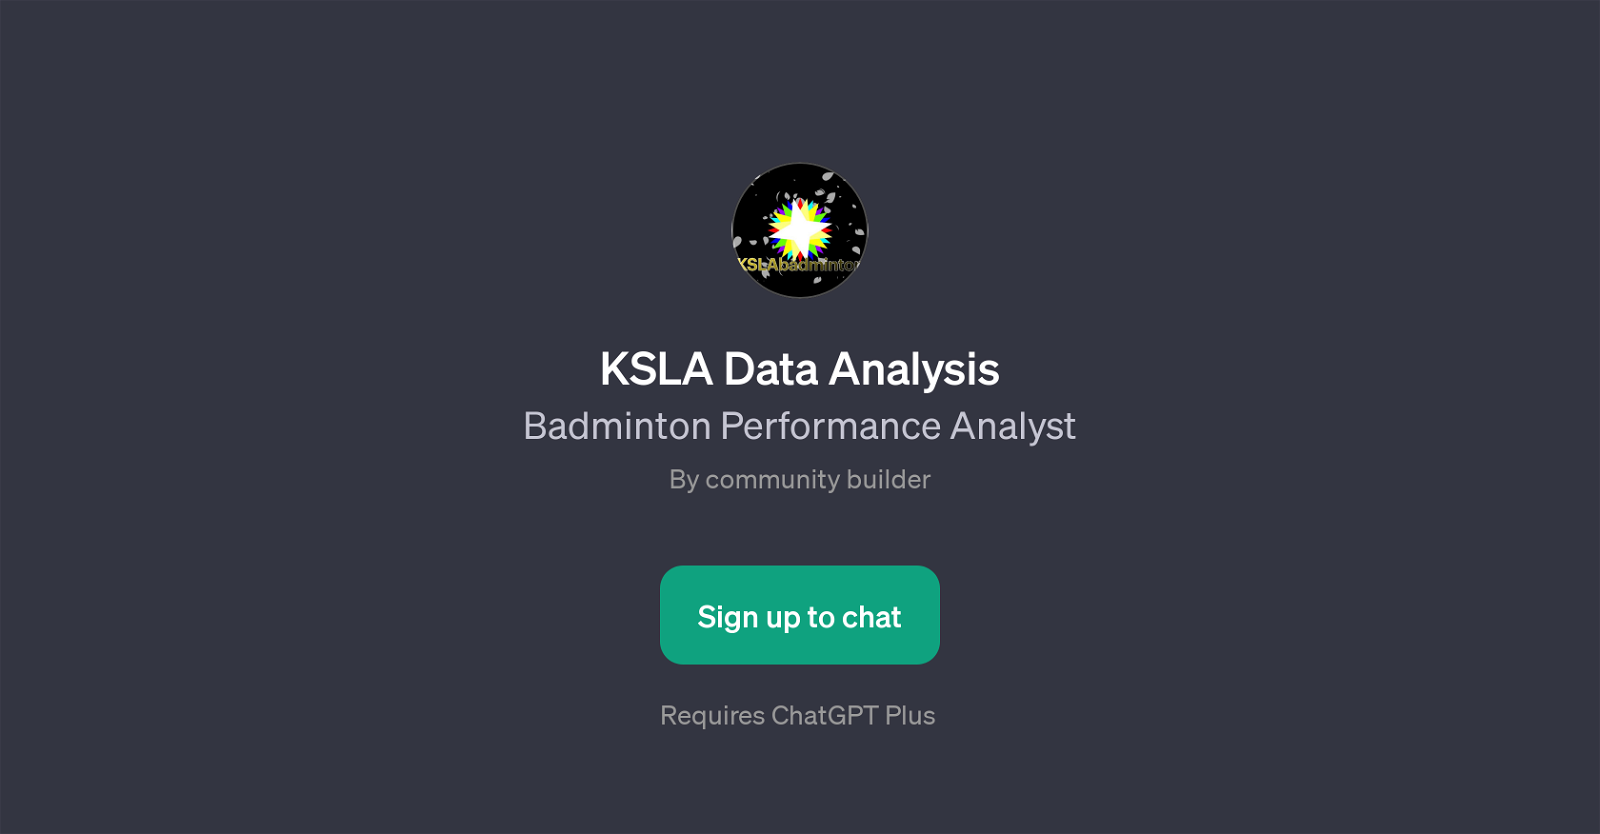 KSLA Data Analysis website